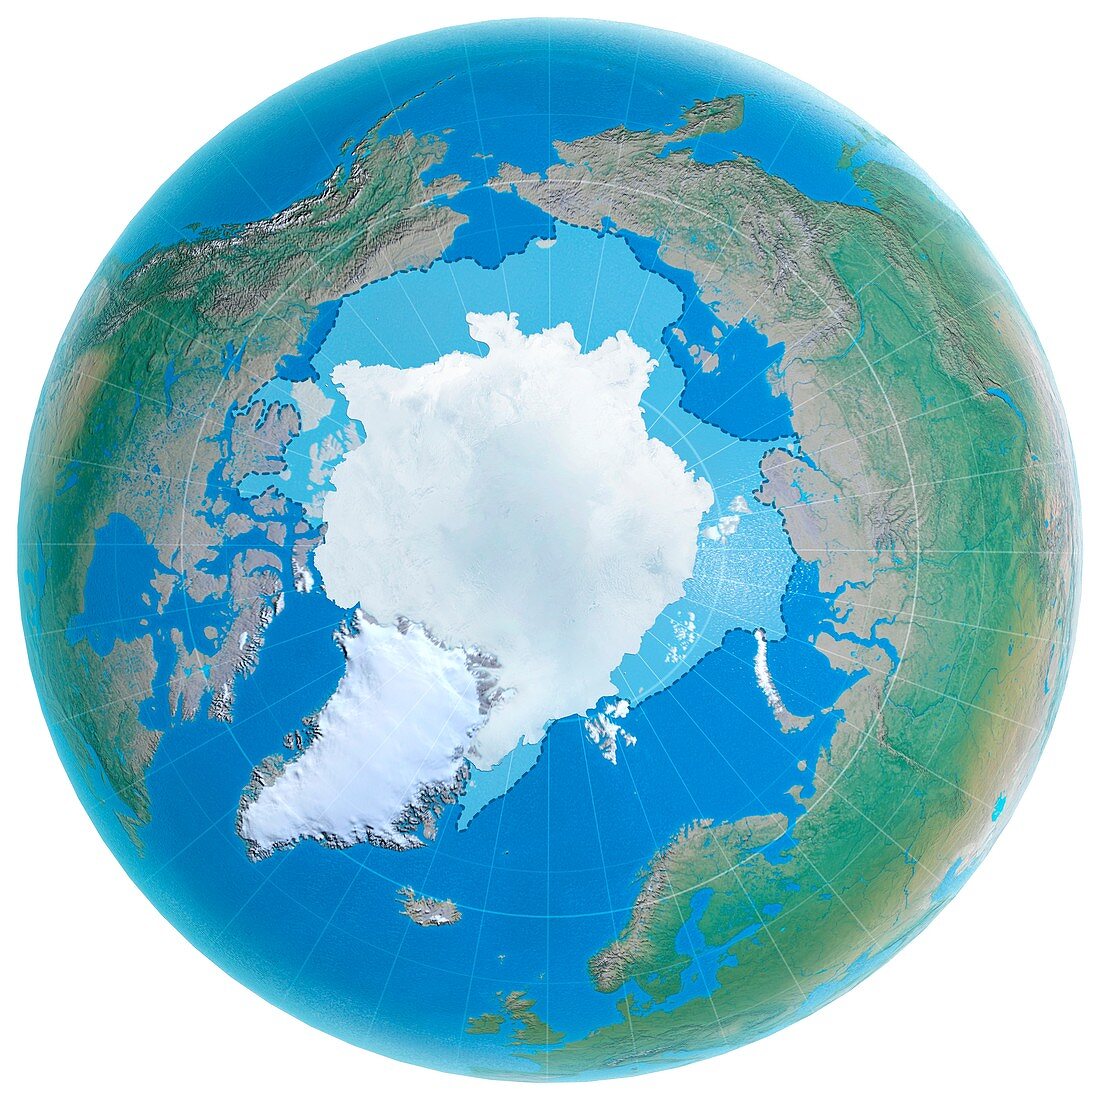 Polar ice cap shrinking, illustration